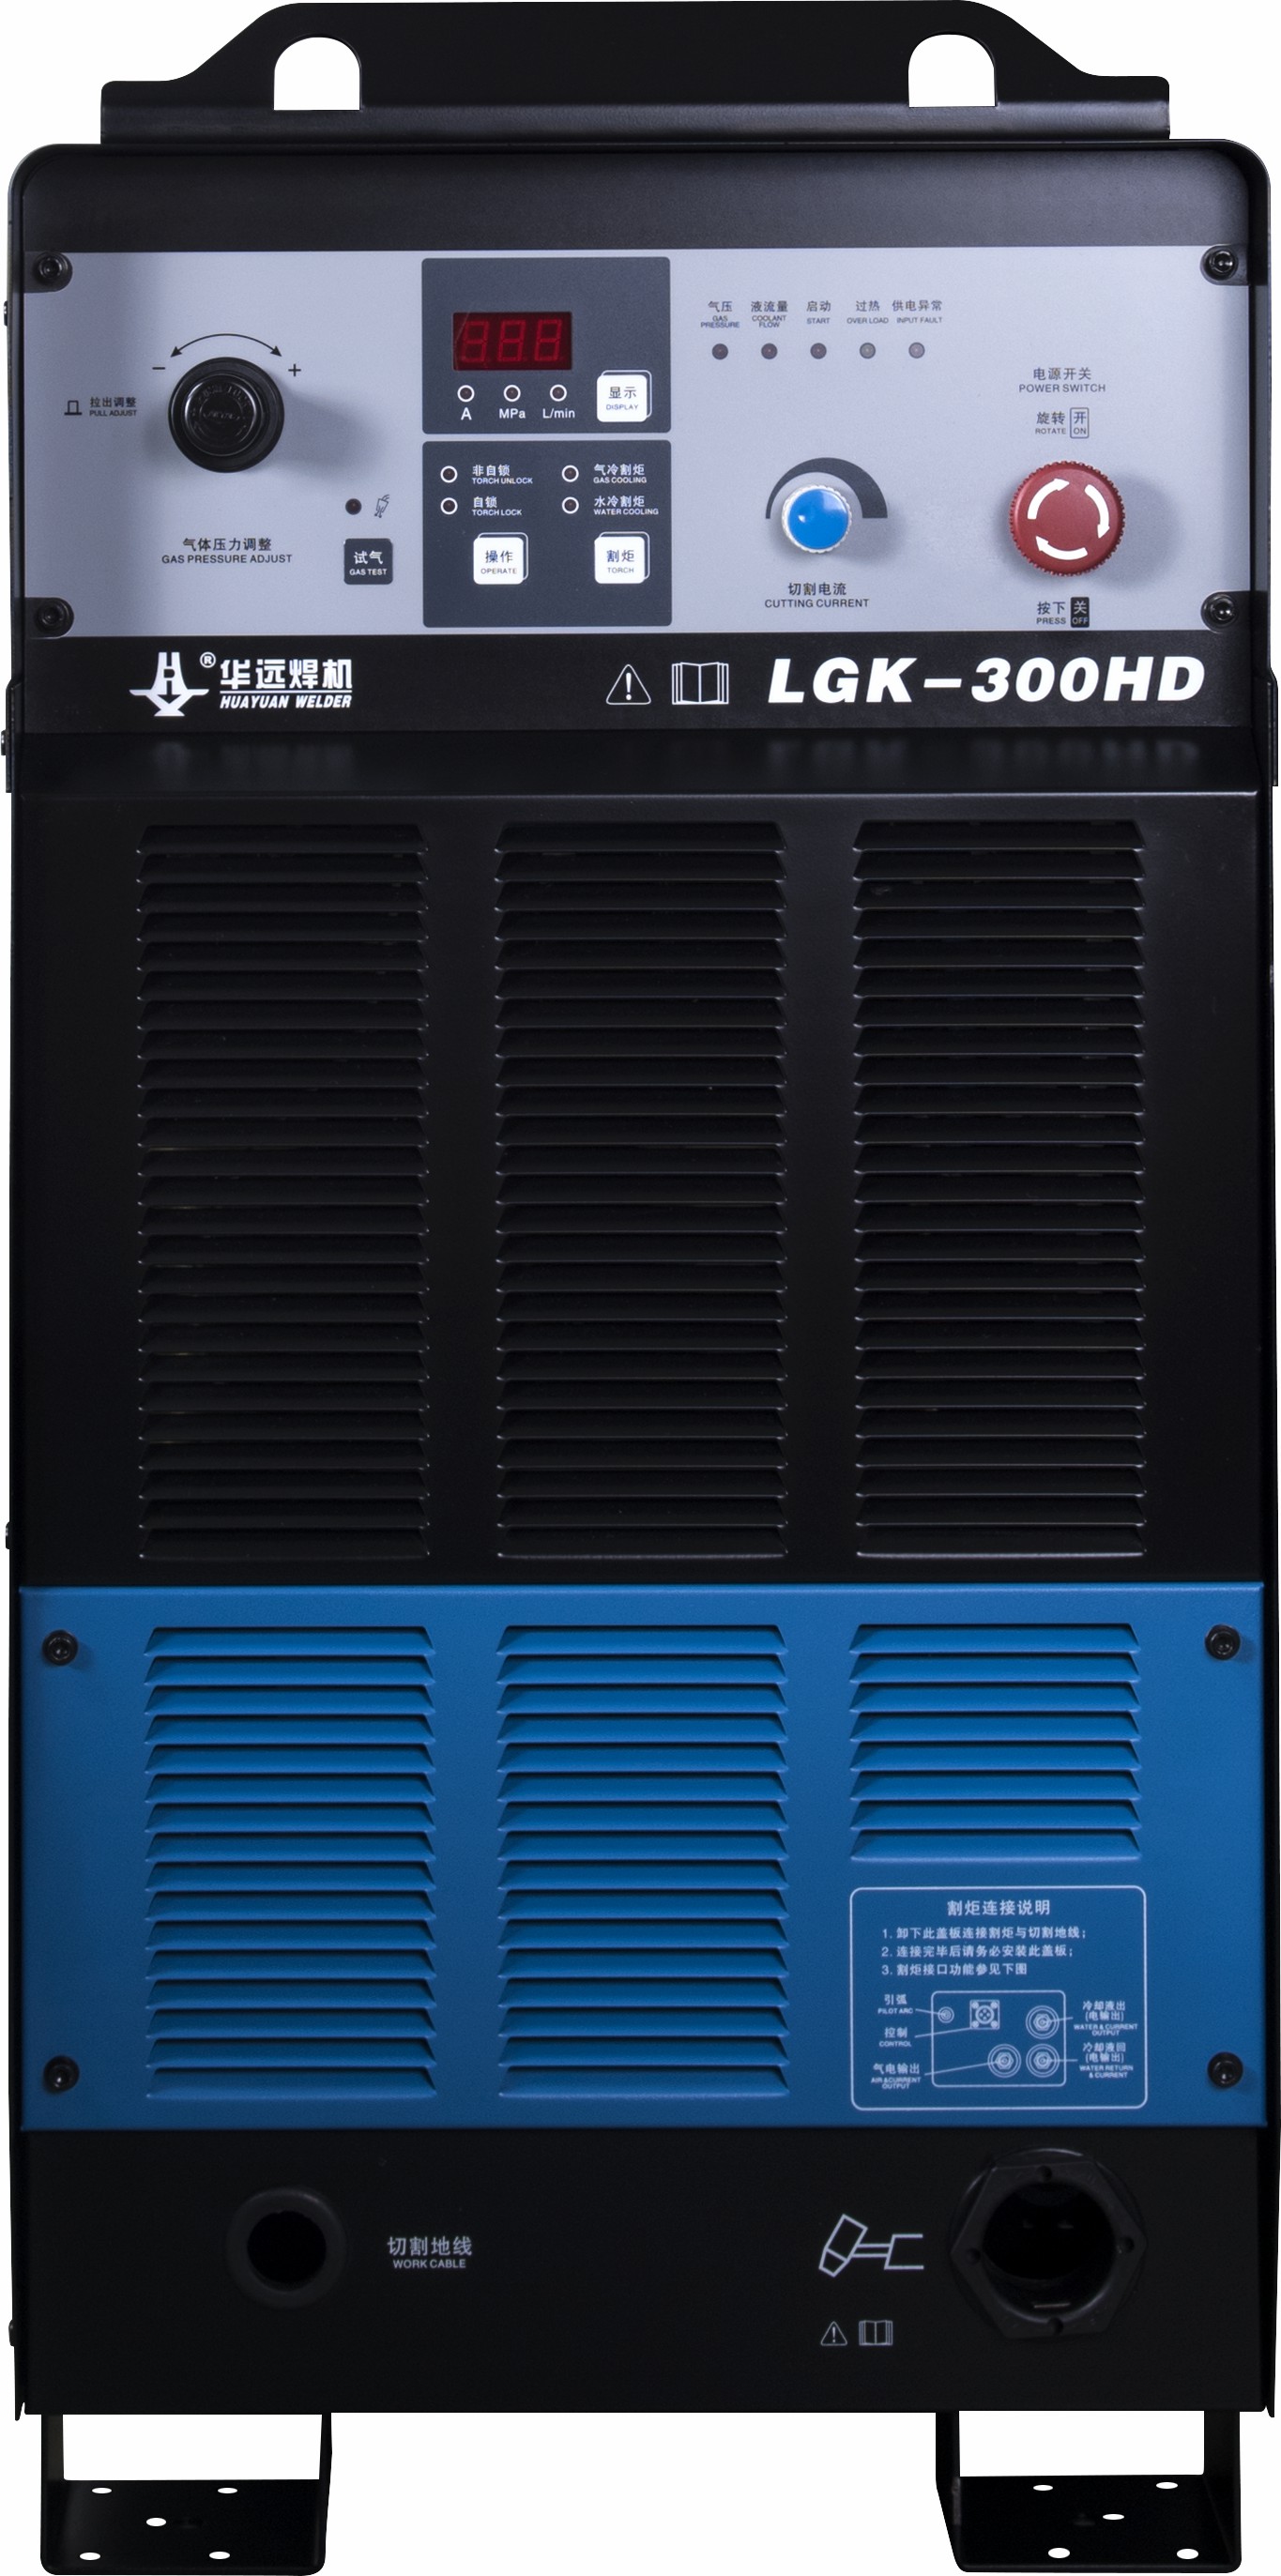 LGK-300HD Huayuan CNC Use Plasma Cutting Machine